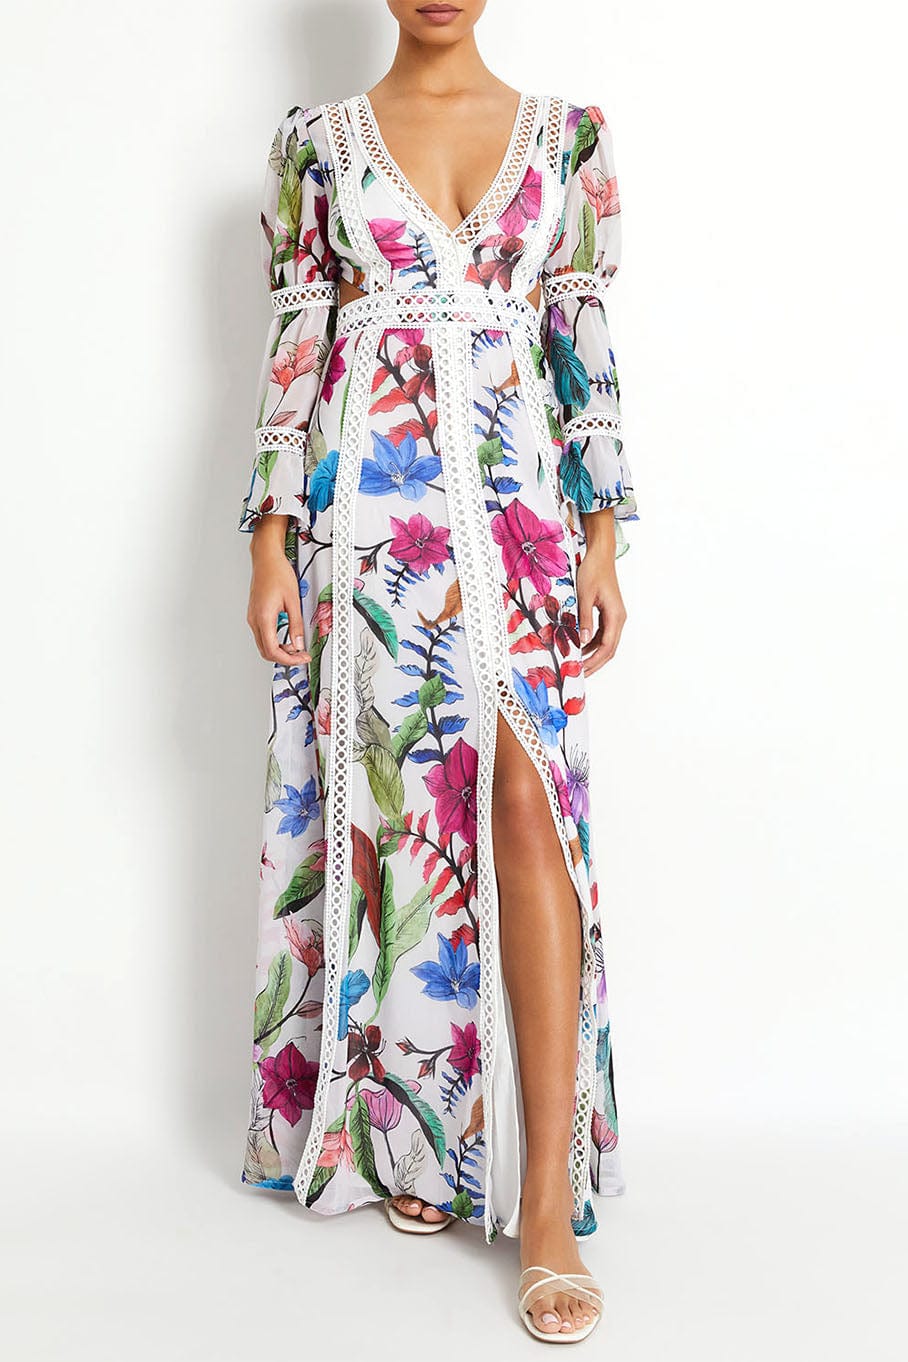 Zamia Lace Trim Maxi Dress CLOTHINGDRESSCASUAL PATBO   